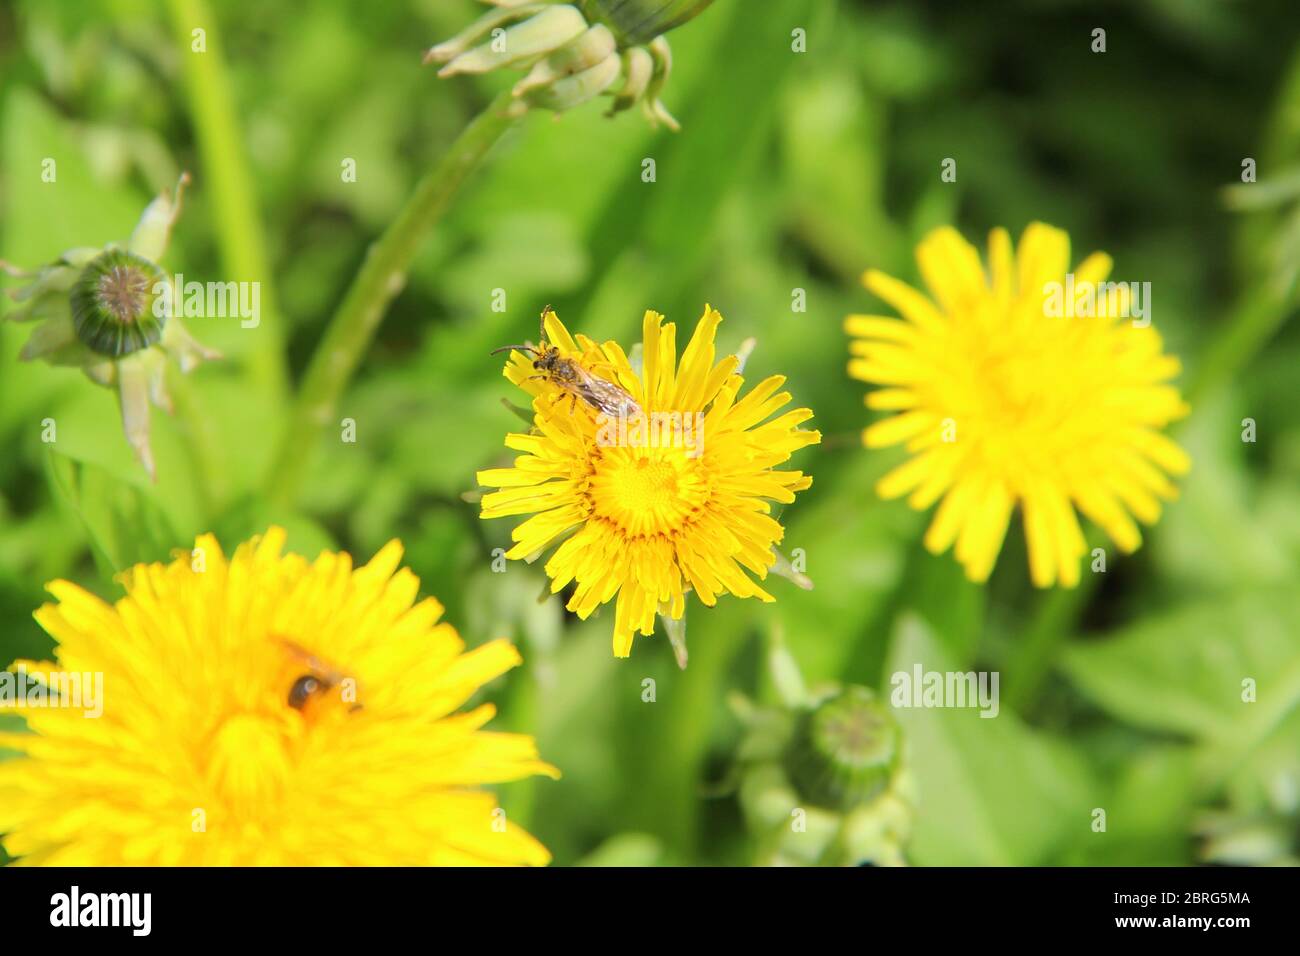 Bright yellow flowers dandelions in green grass. Taraxacum closeup stock photo. Fresh festive summer and spring mood Stock Photo